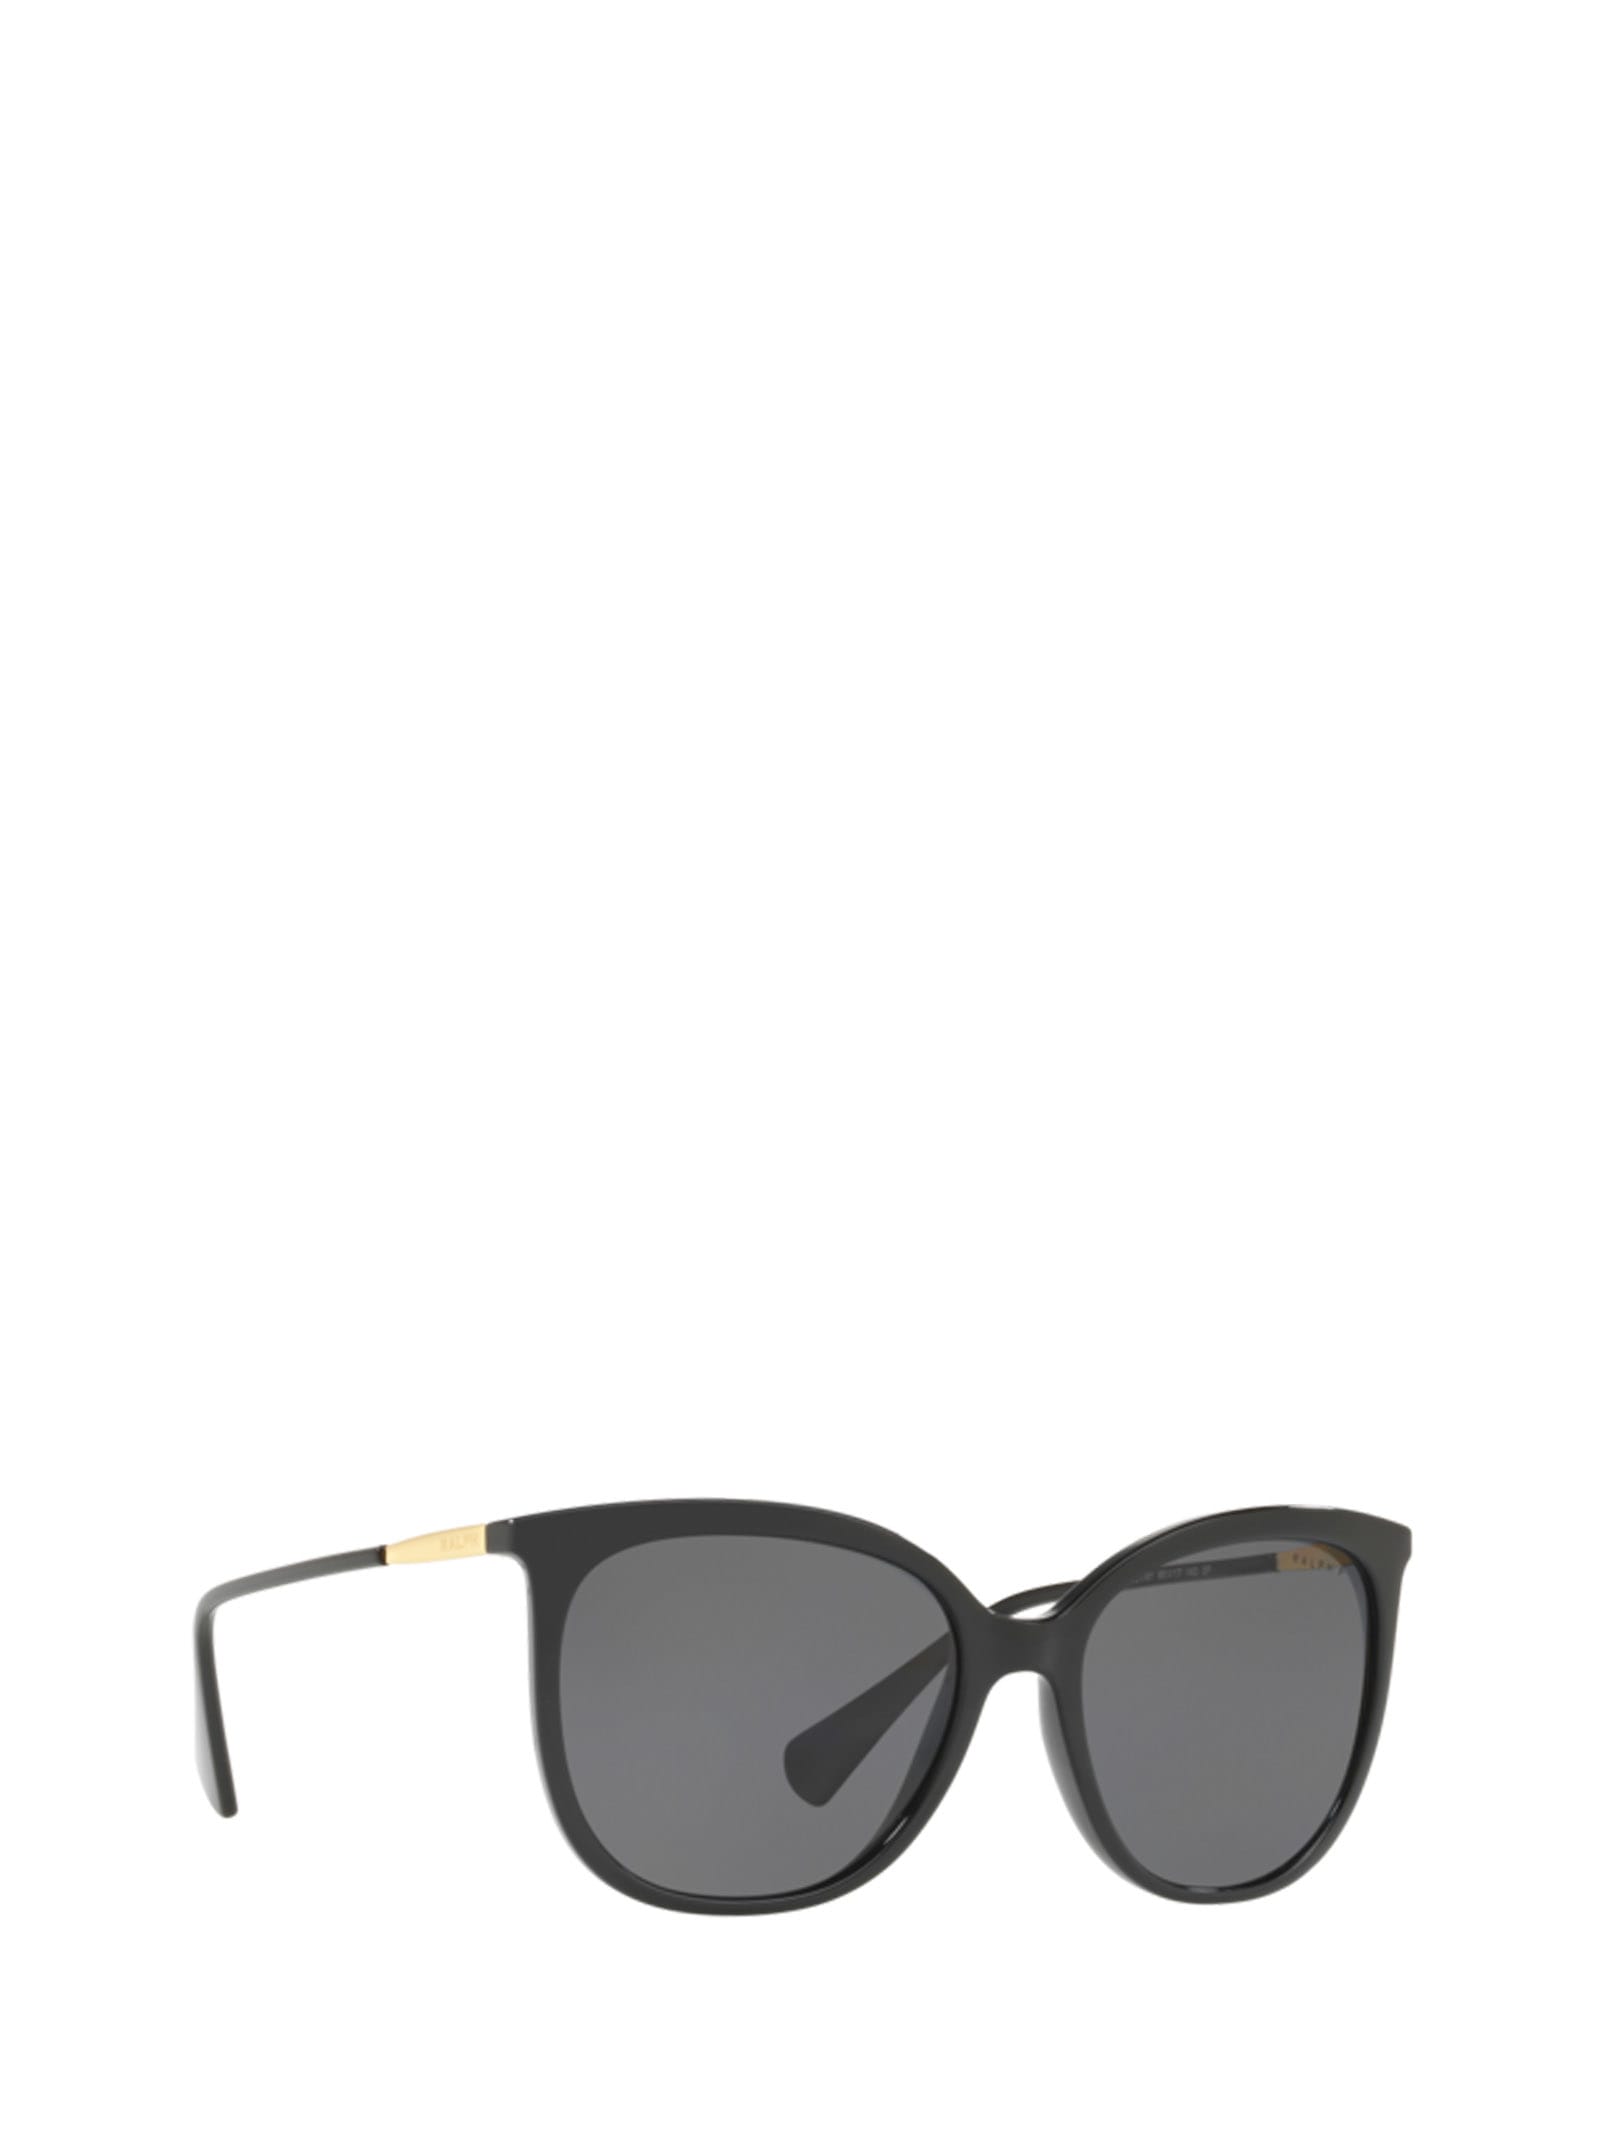 Shop Polo Ralph Lauren Ra5248 Shiny Black Sunglasses